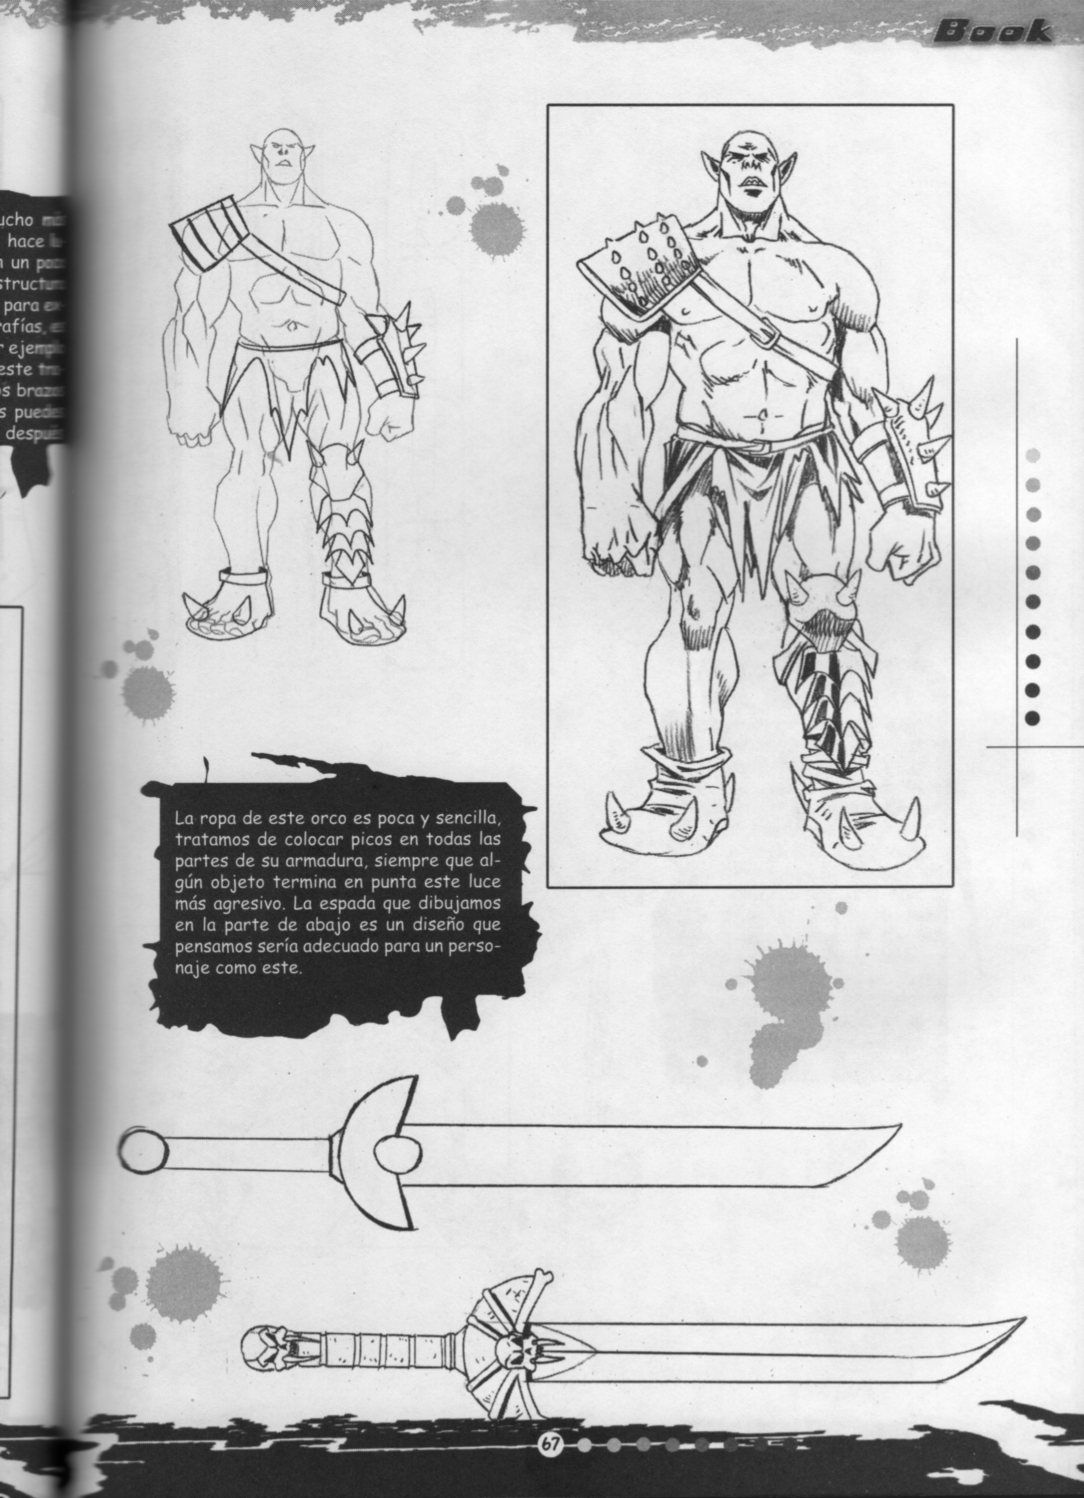 DibujArte Epecial Manga #18/20 - Armas armaduras y Personajes fantasticos [Spanish] 66